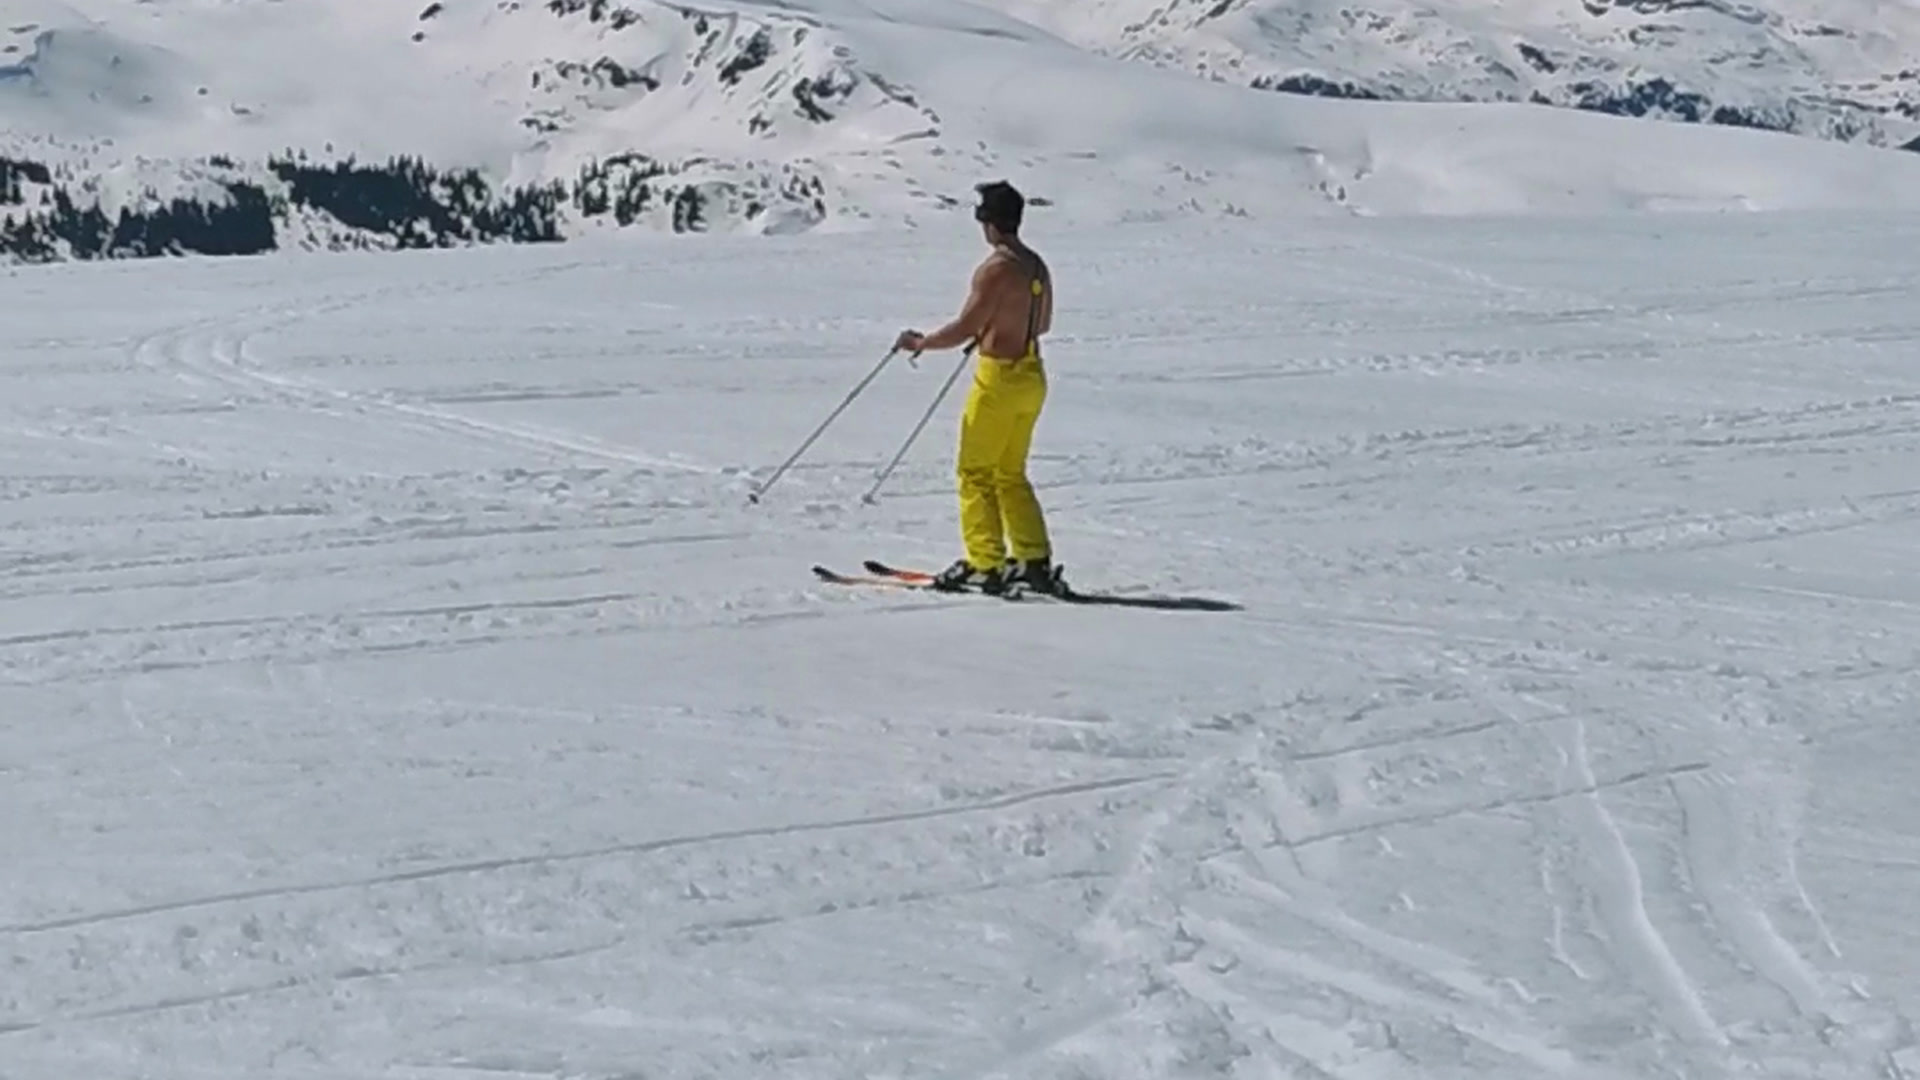 Topless skiing